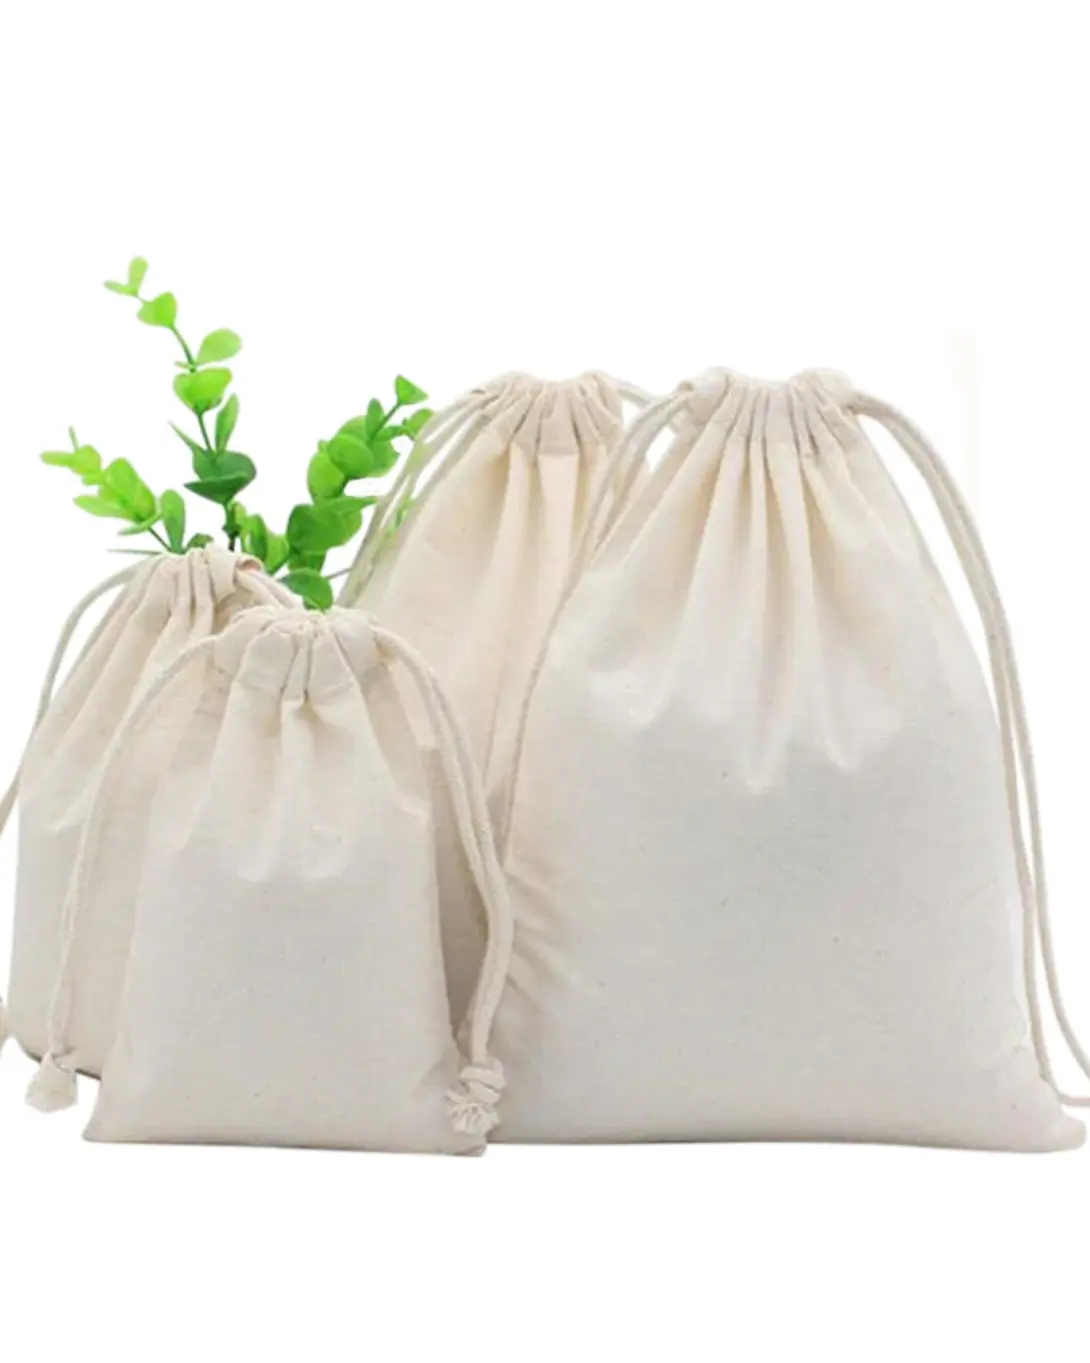 शॉपिंग बैग कपड़ा सूती मलमल आभूषण पाउच बैग सूती ड्रॉस्ट्रिंग बैग